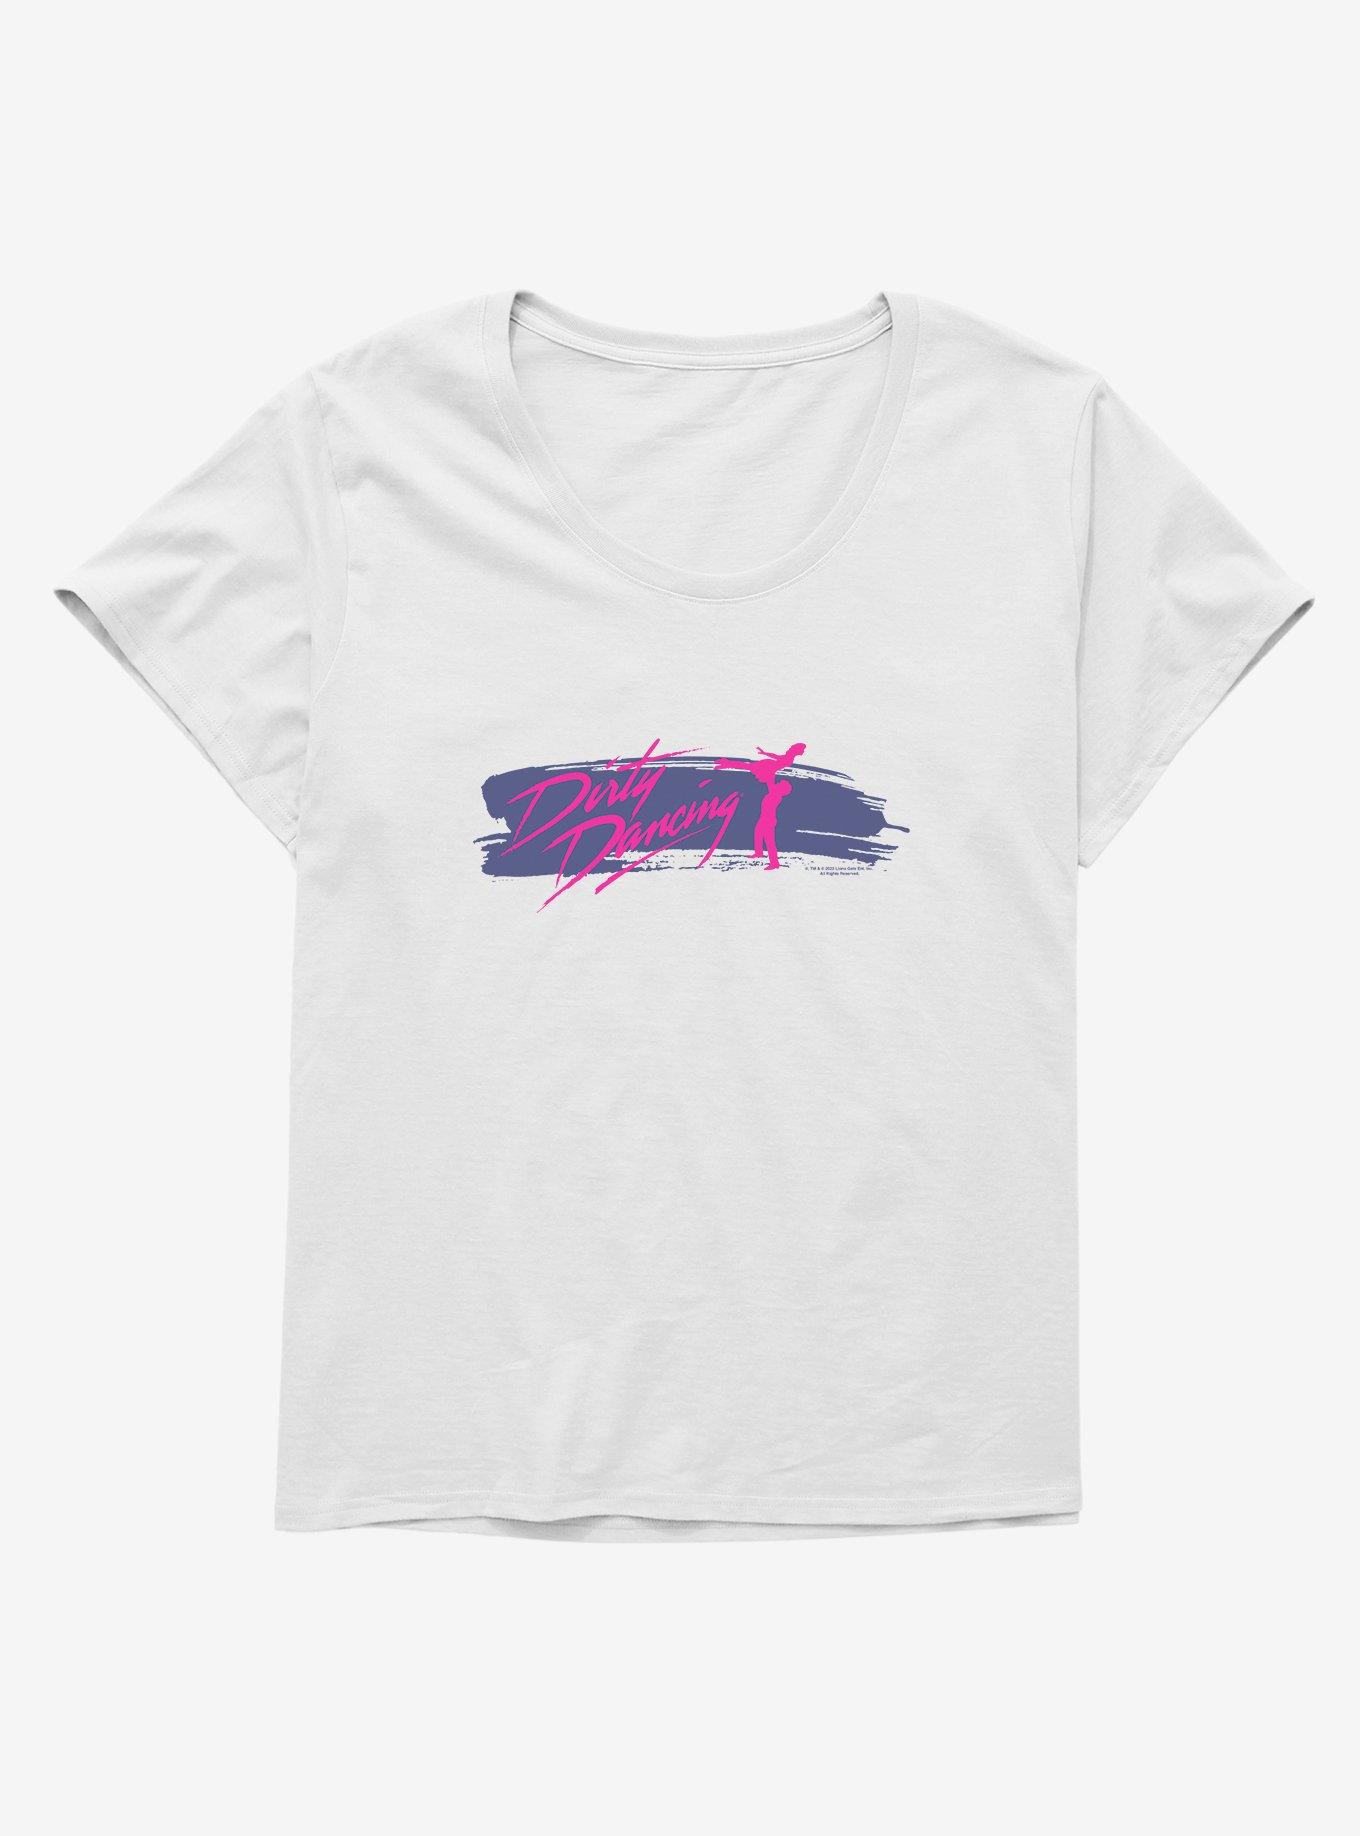 Dirty Dancing Brush Stroke Title Girls T-Shirt Plus